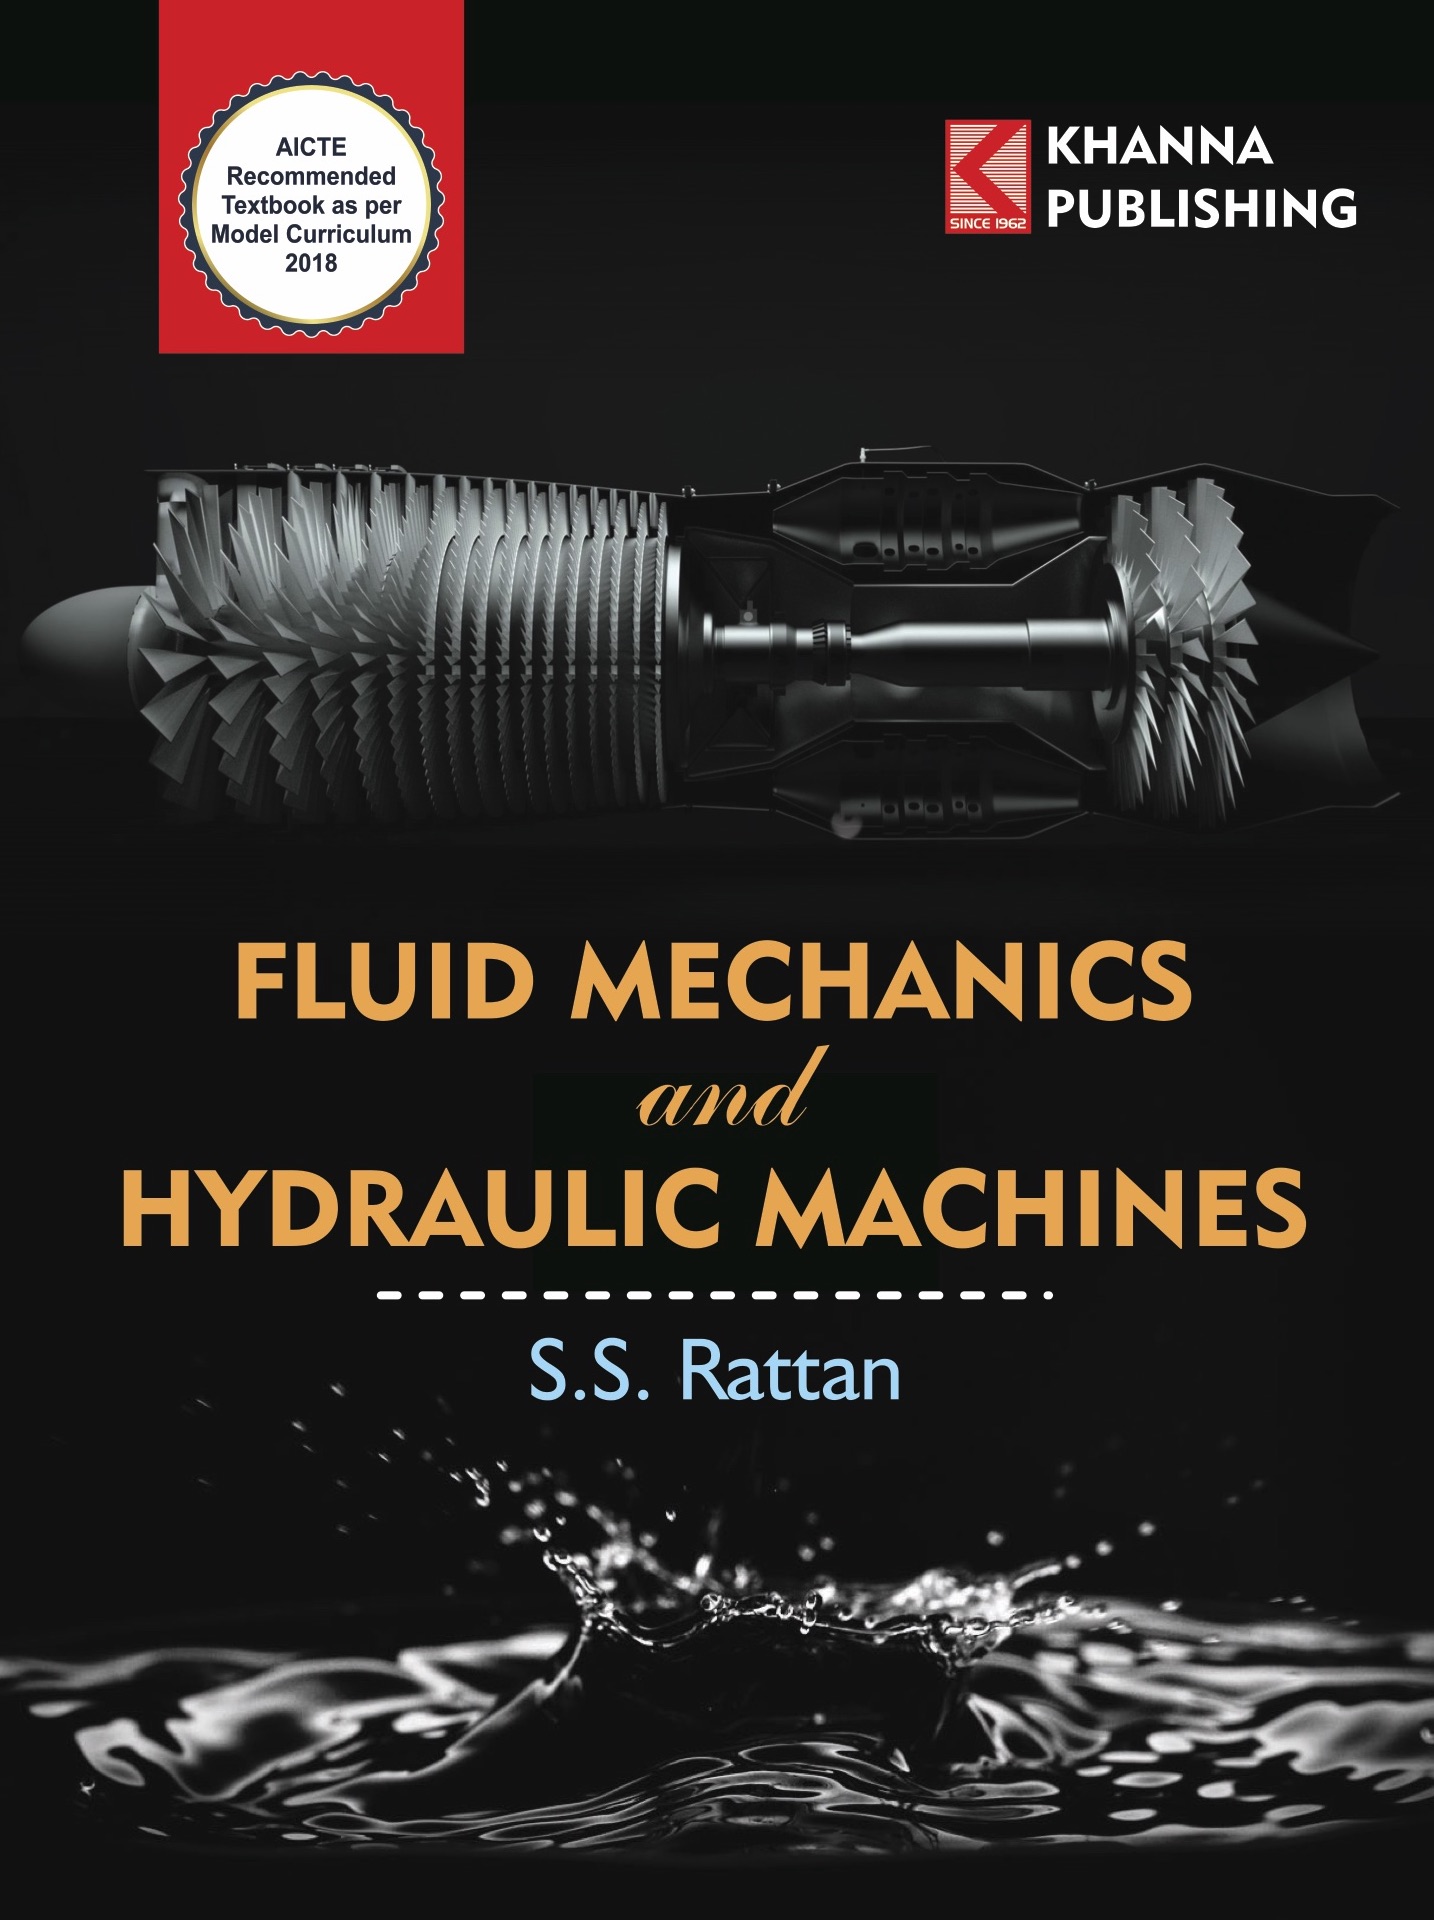 Fluid Mechanics and Hydraulic Machines